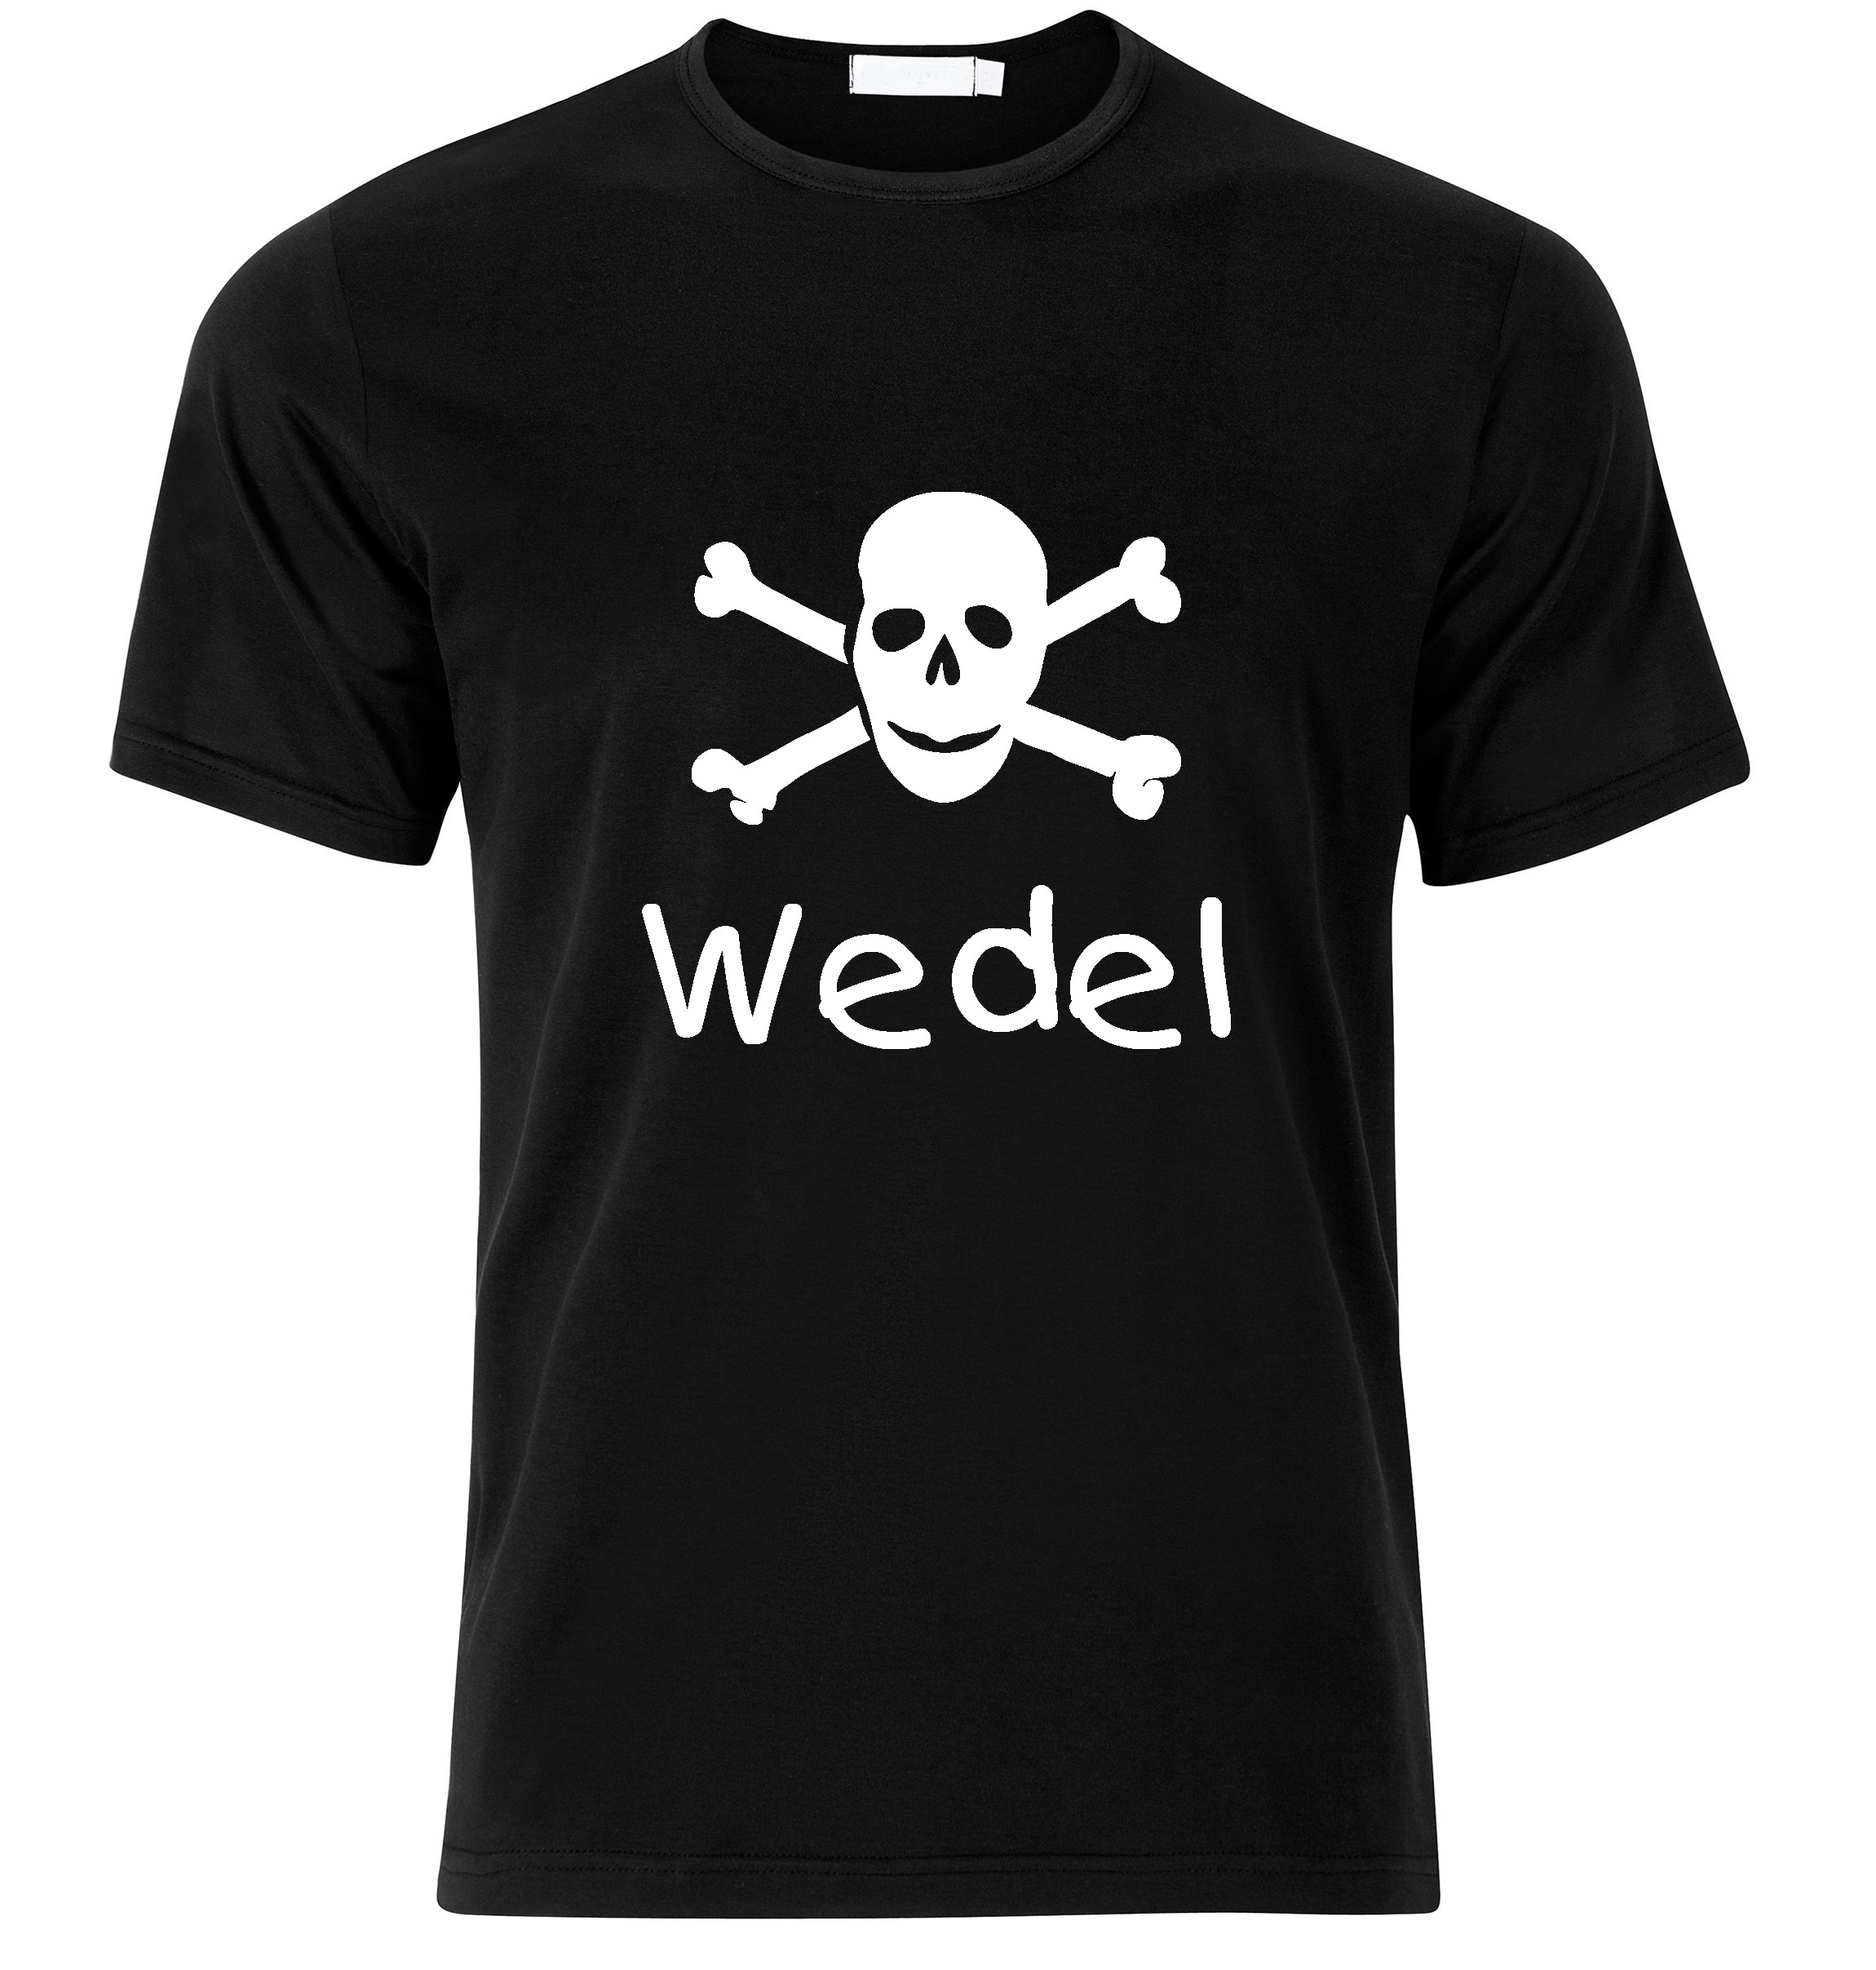 T-Shirt Wedel Jolly Roger, Totenkopf